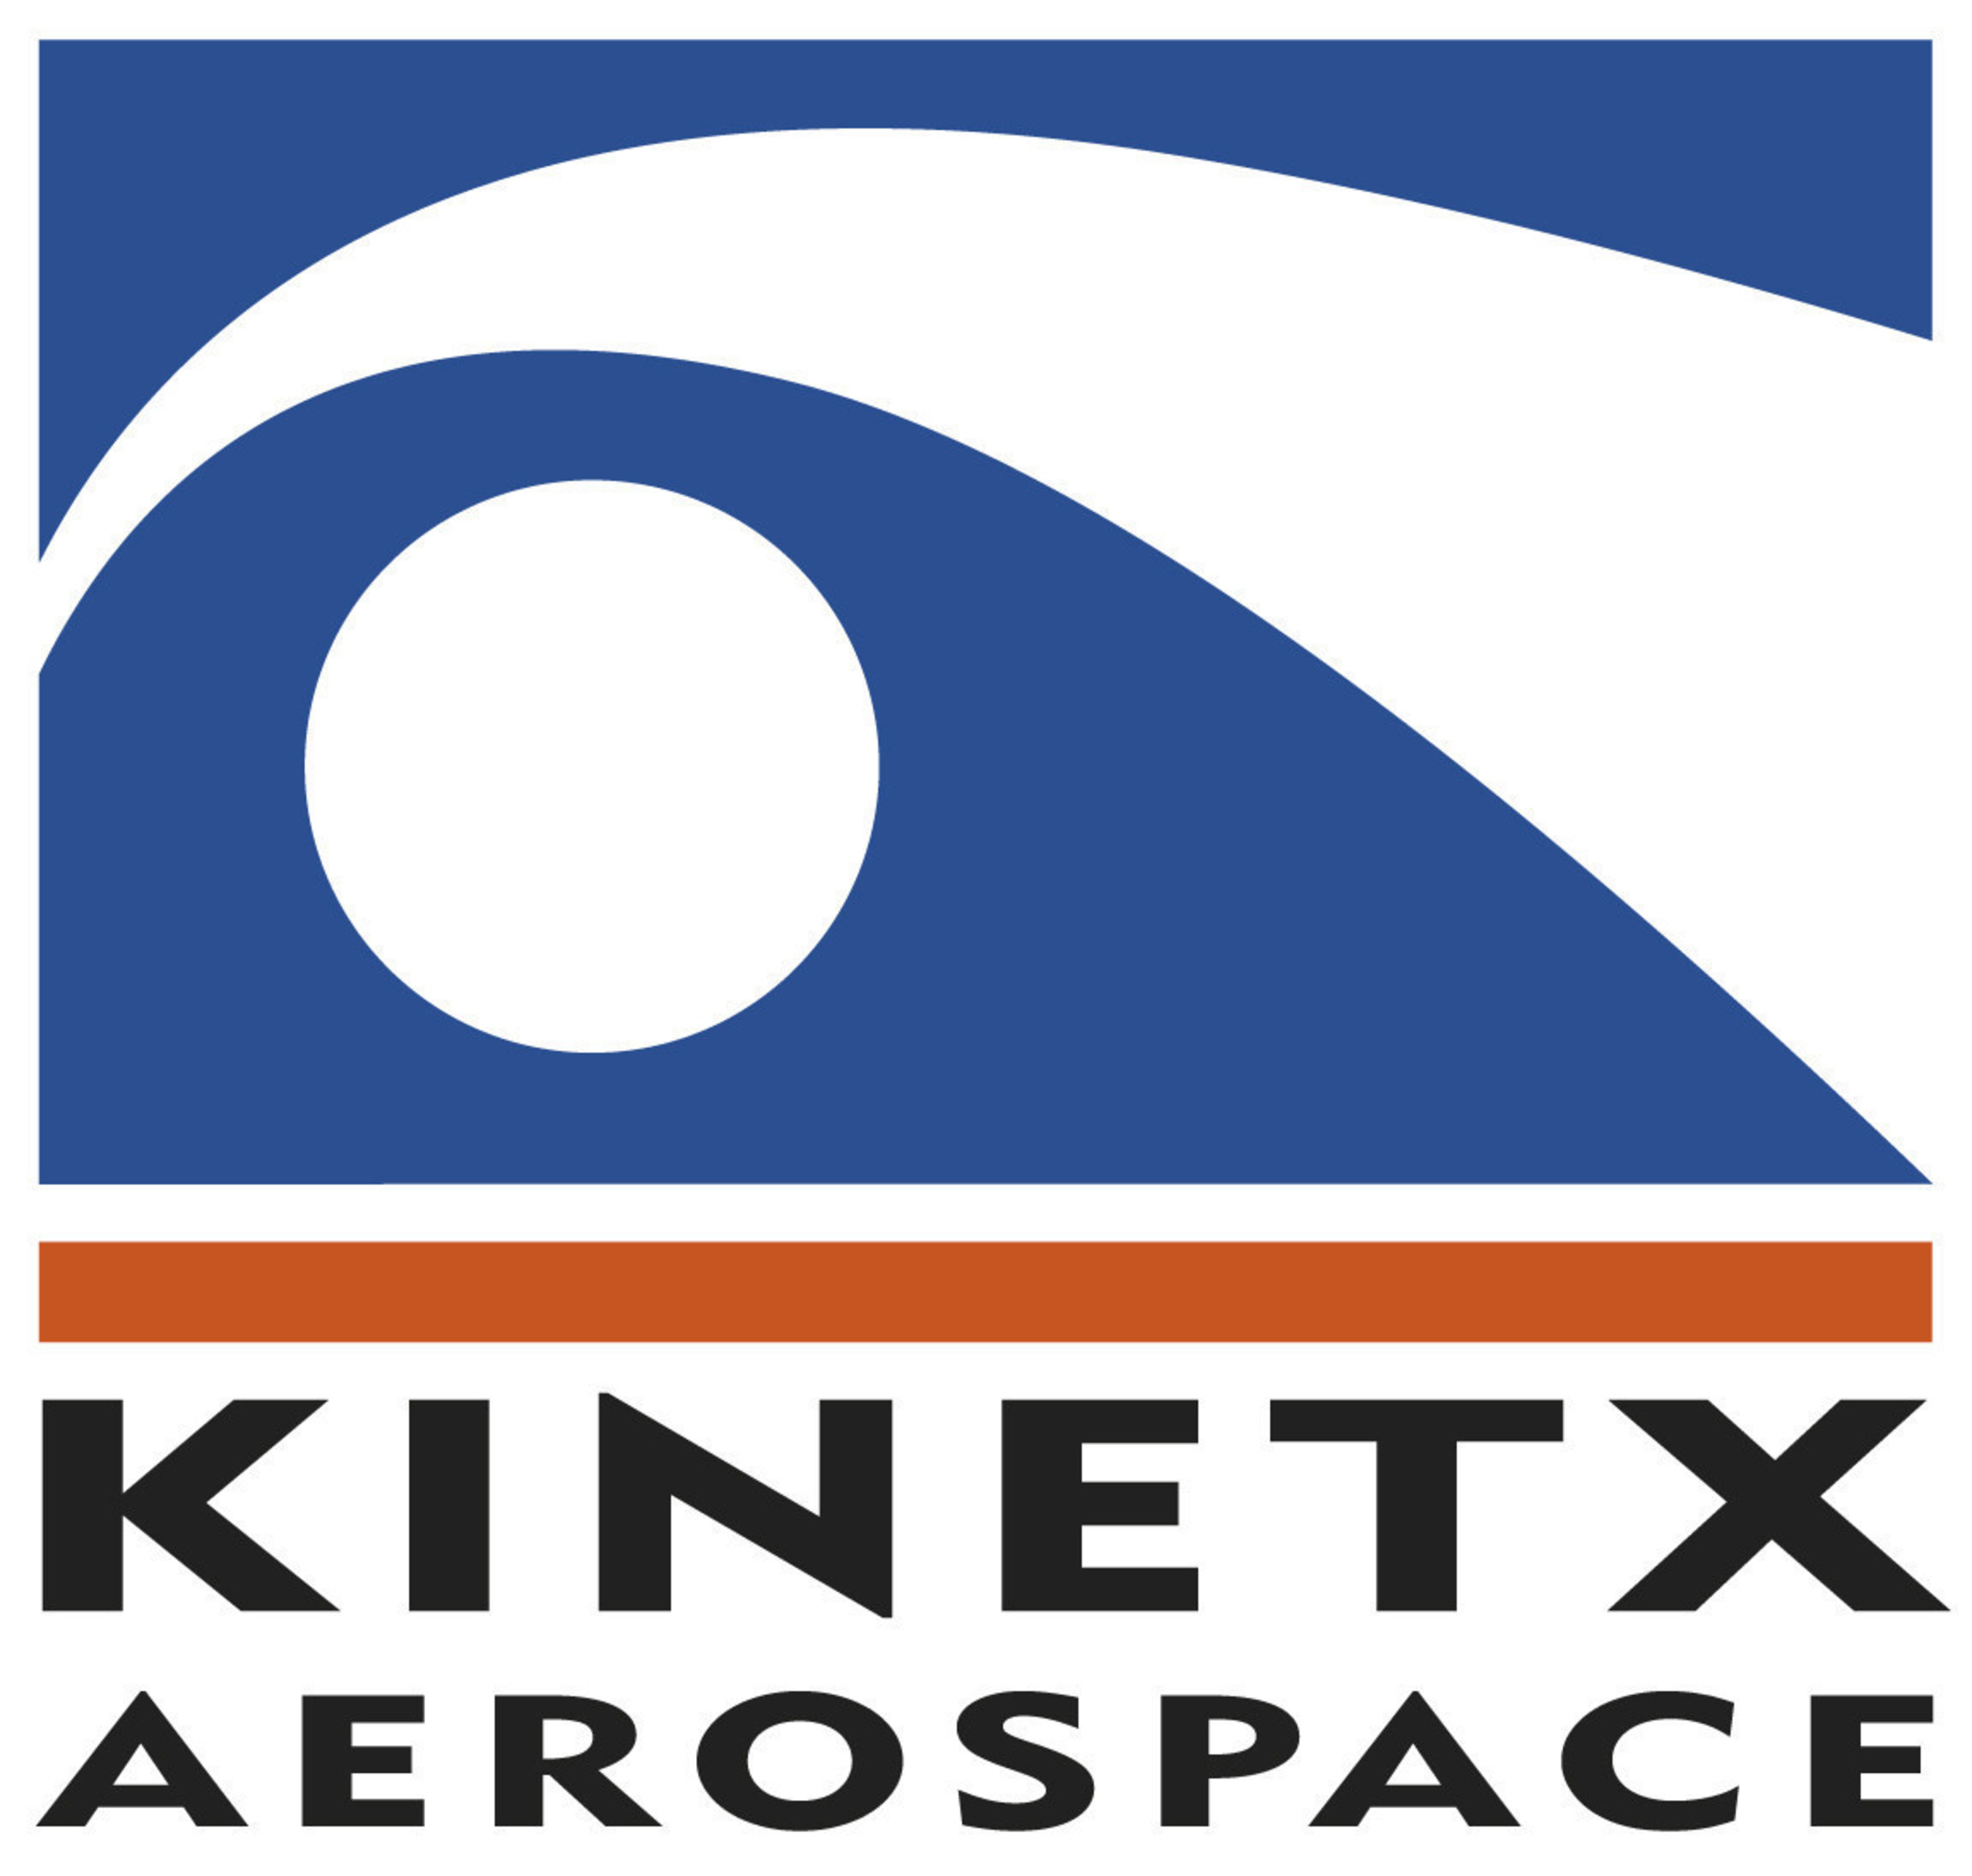 KinetX Aerospace logo